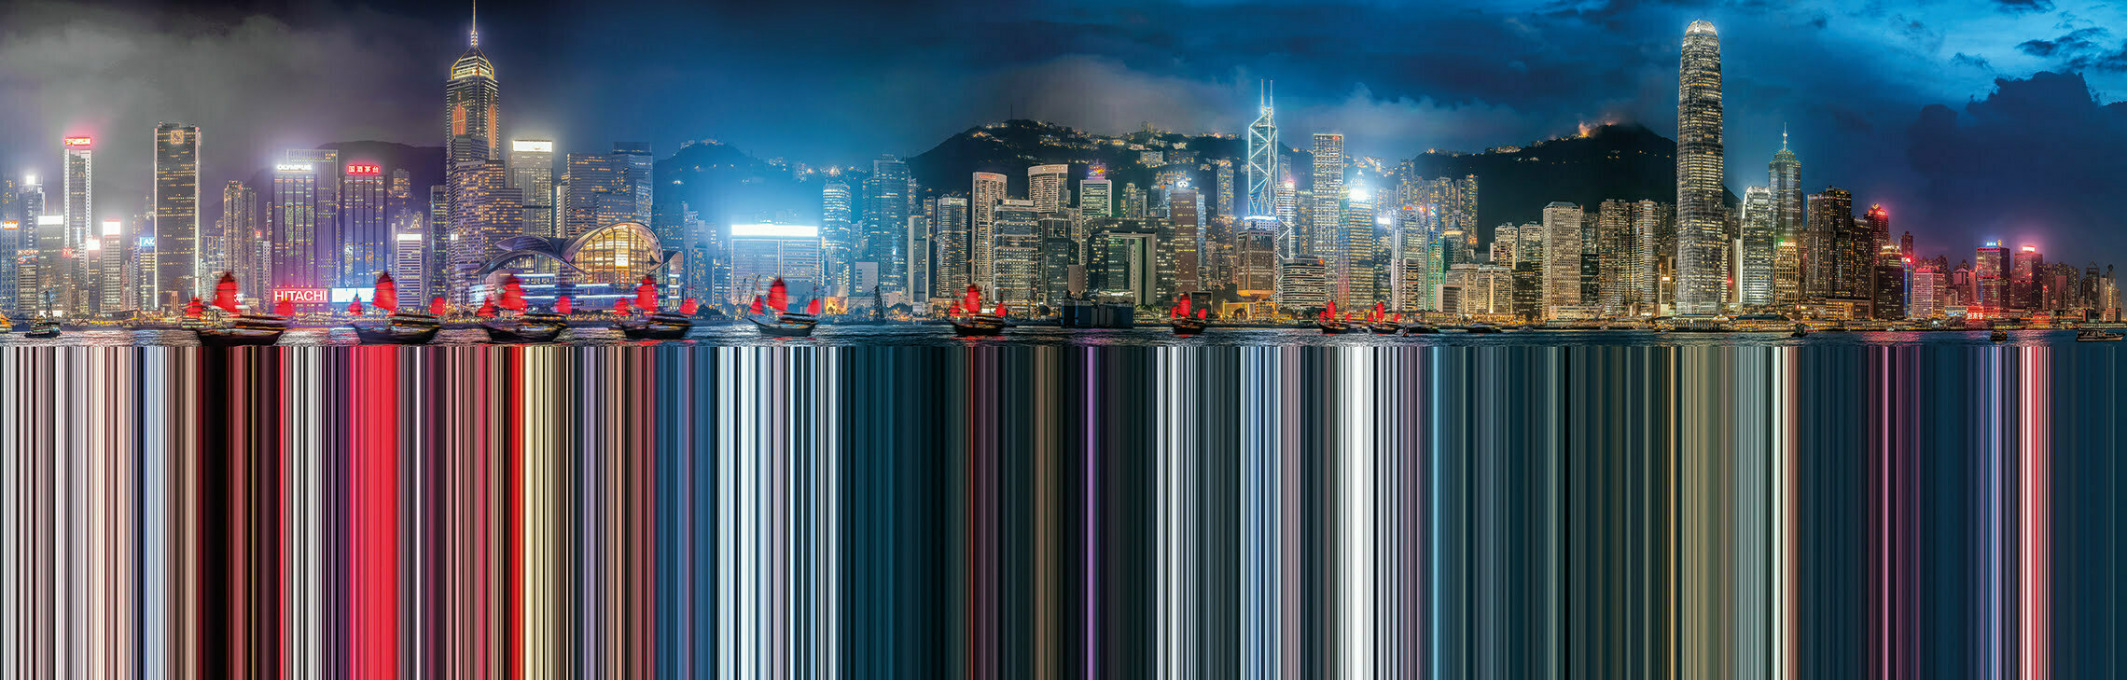 Murat Germen: Facsimile, Hong Kong #5, 2014.